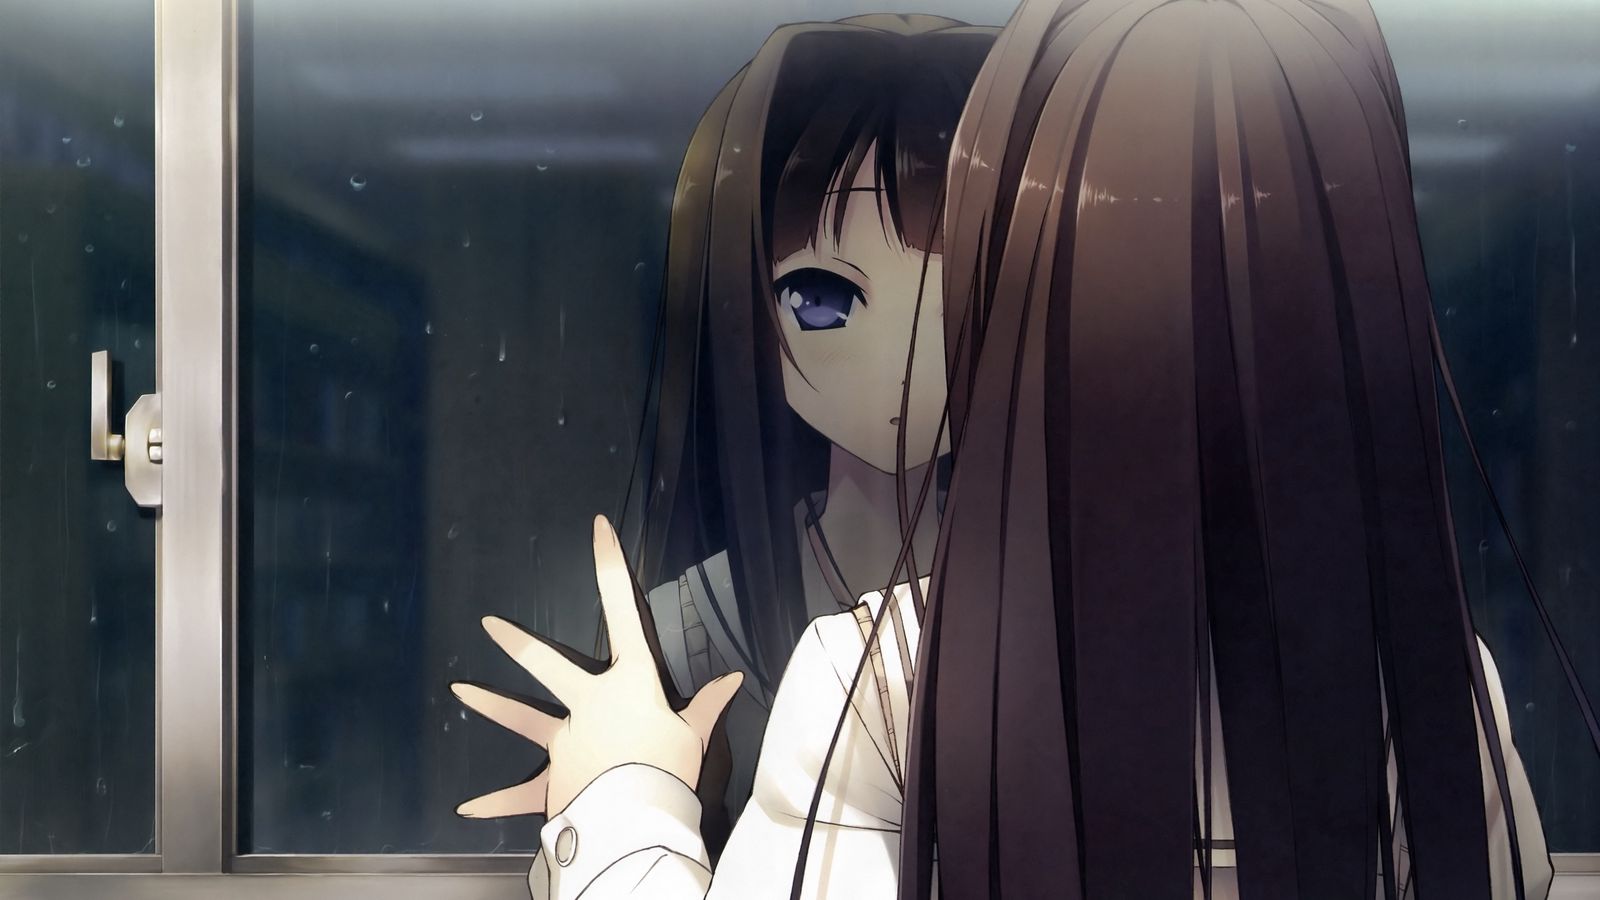 Download wallpaper 1600x900 anime girl, window, reflection, drop, rain,  look widescreen 16:9 hd background